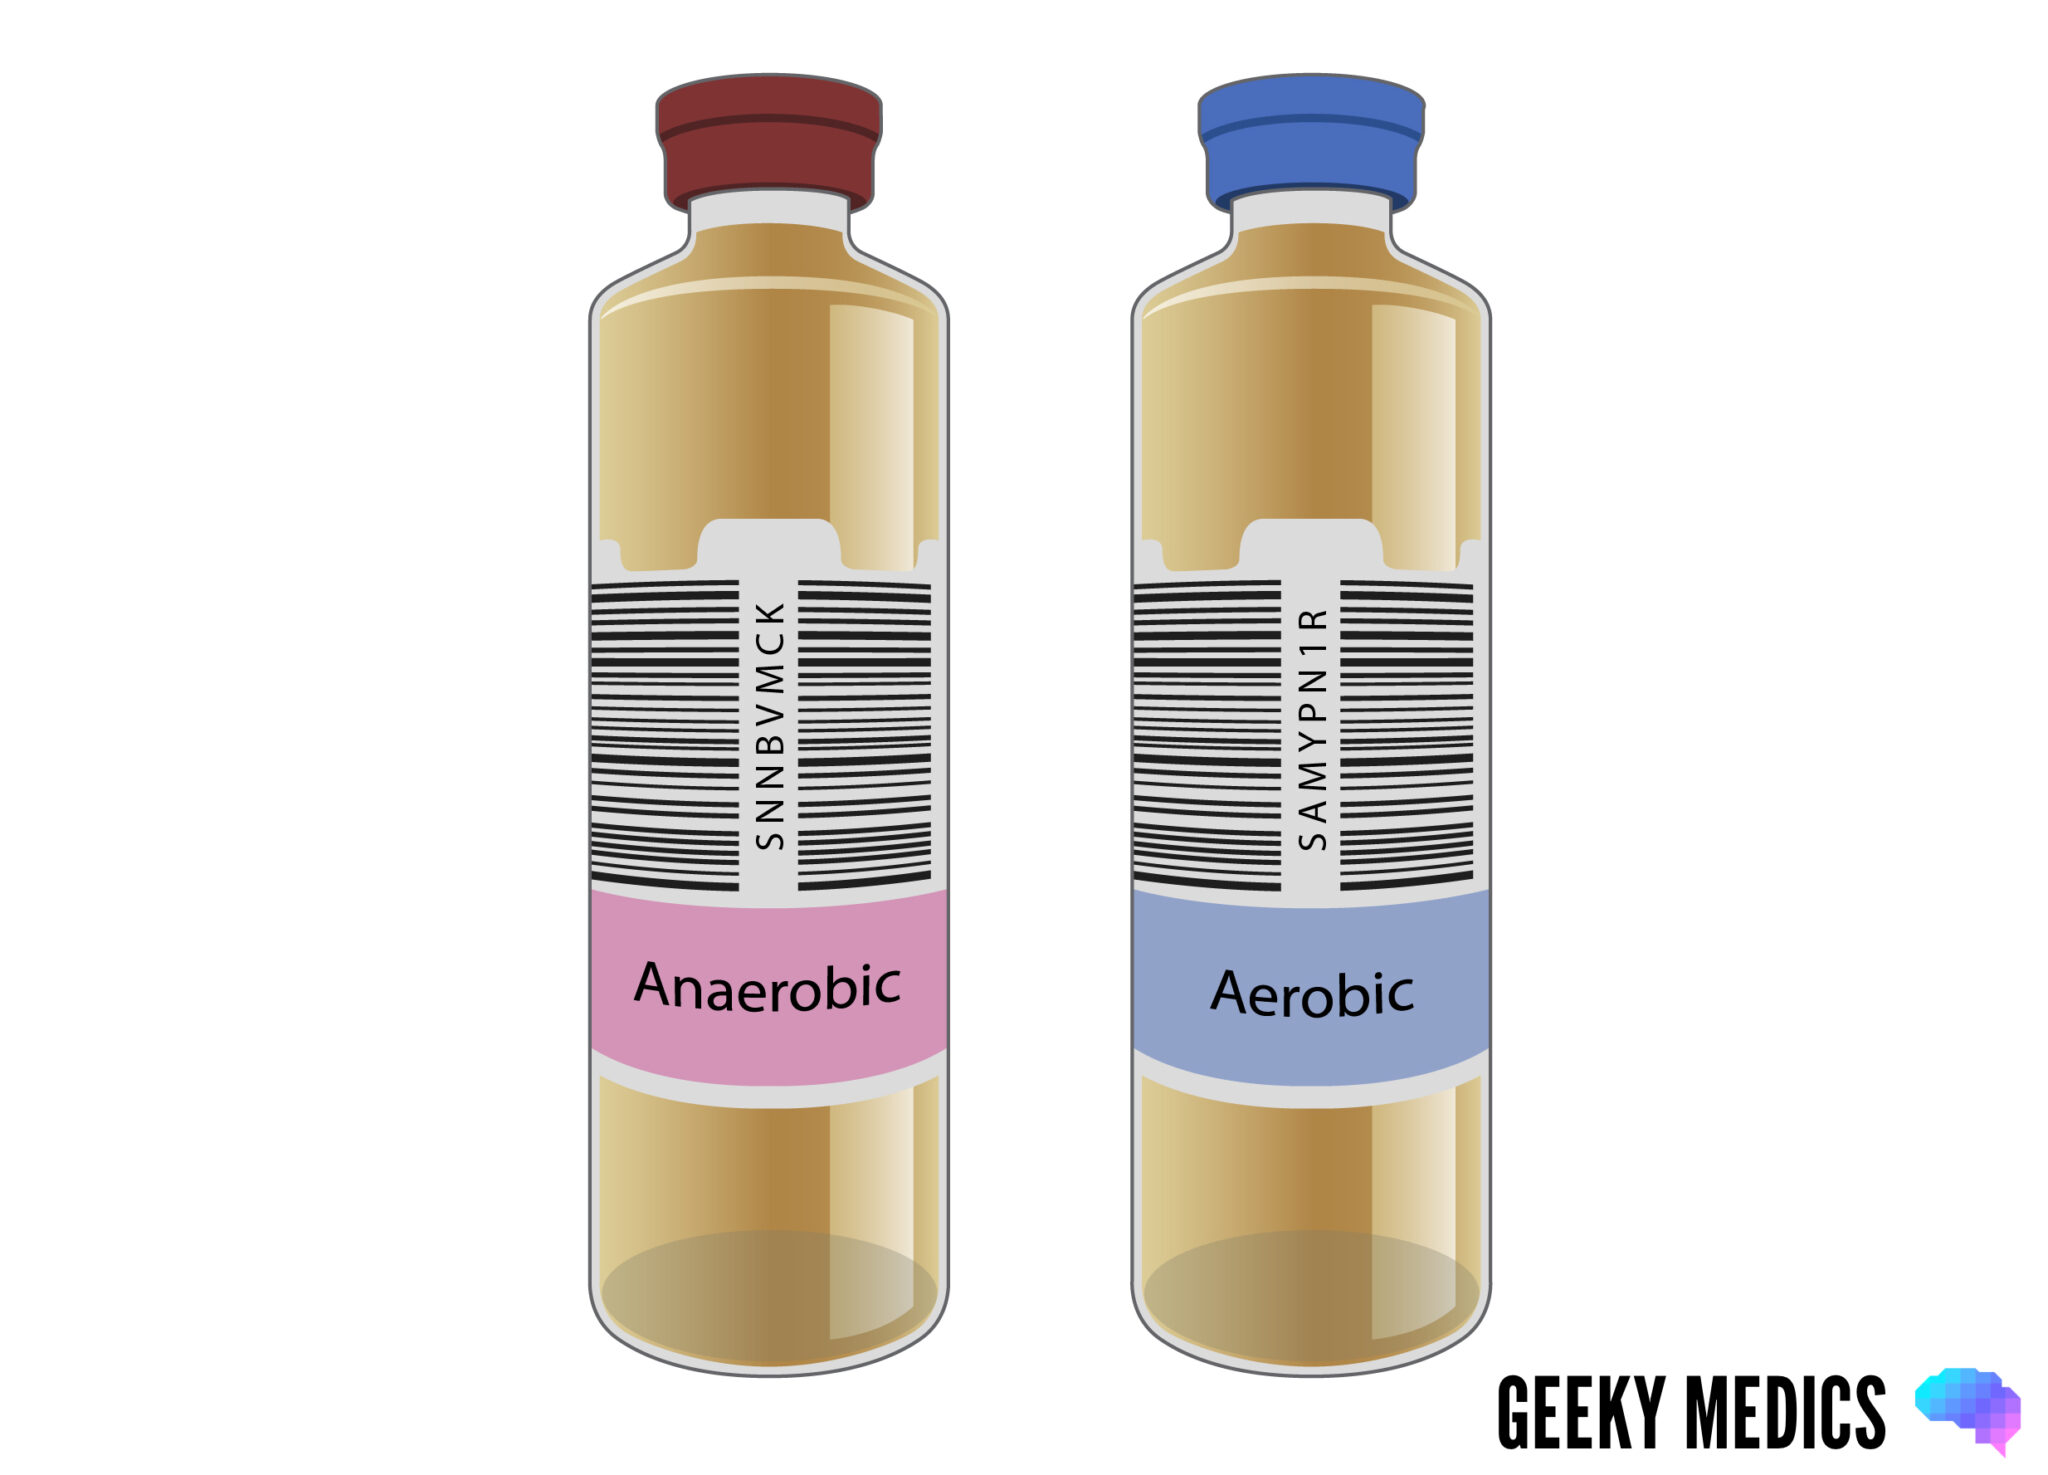 Blood culture bottles